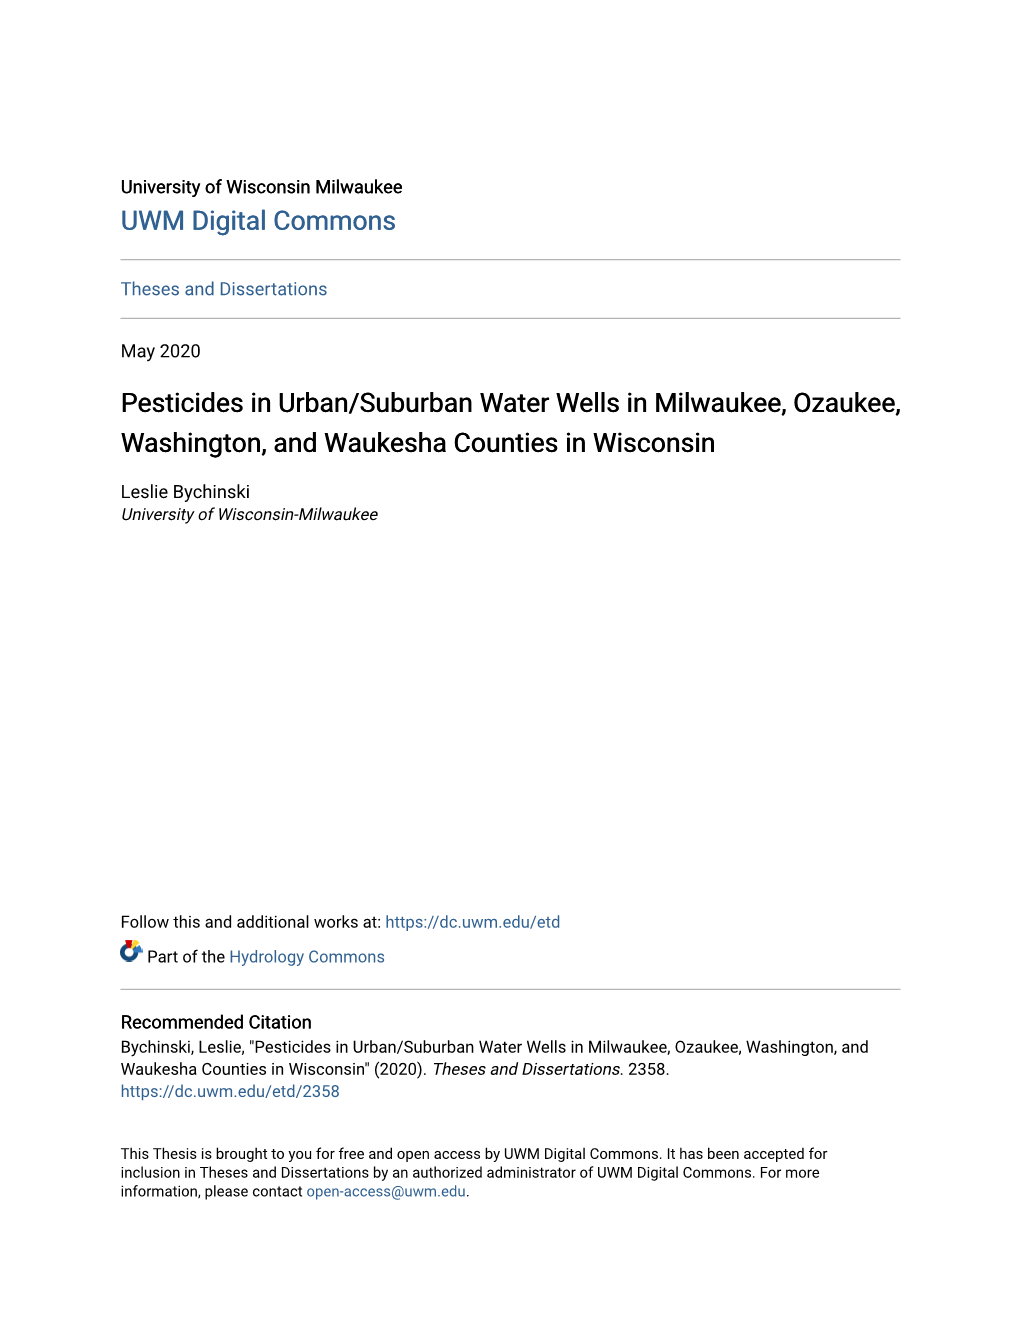 Pesticides in Urban/Suburban Water Wells in Milwaukee, Ozaukee, Washington, and Waukesha Counties in Wisconsin